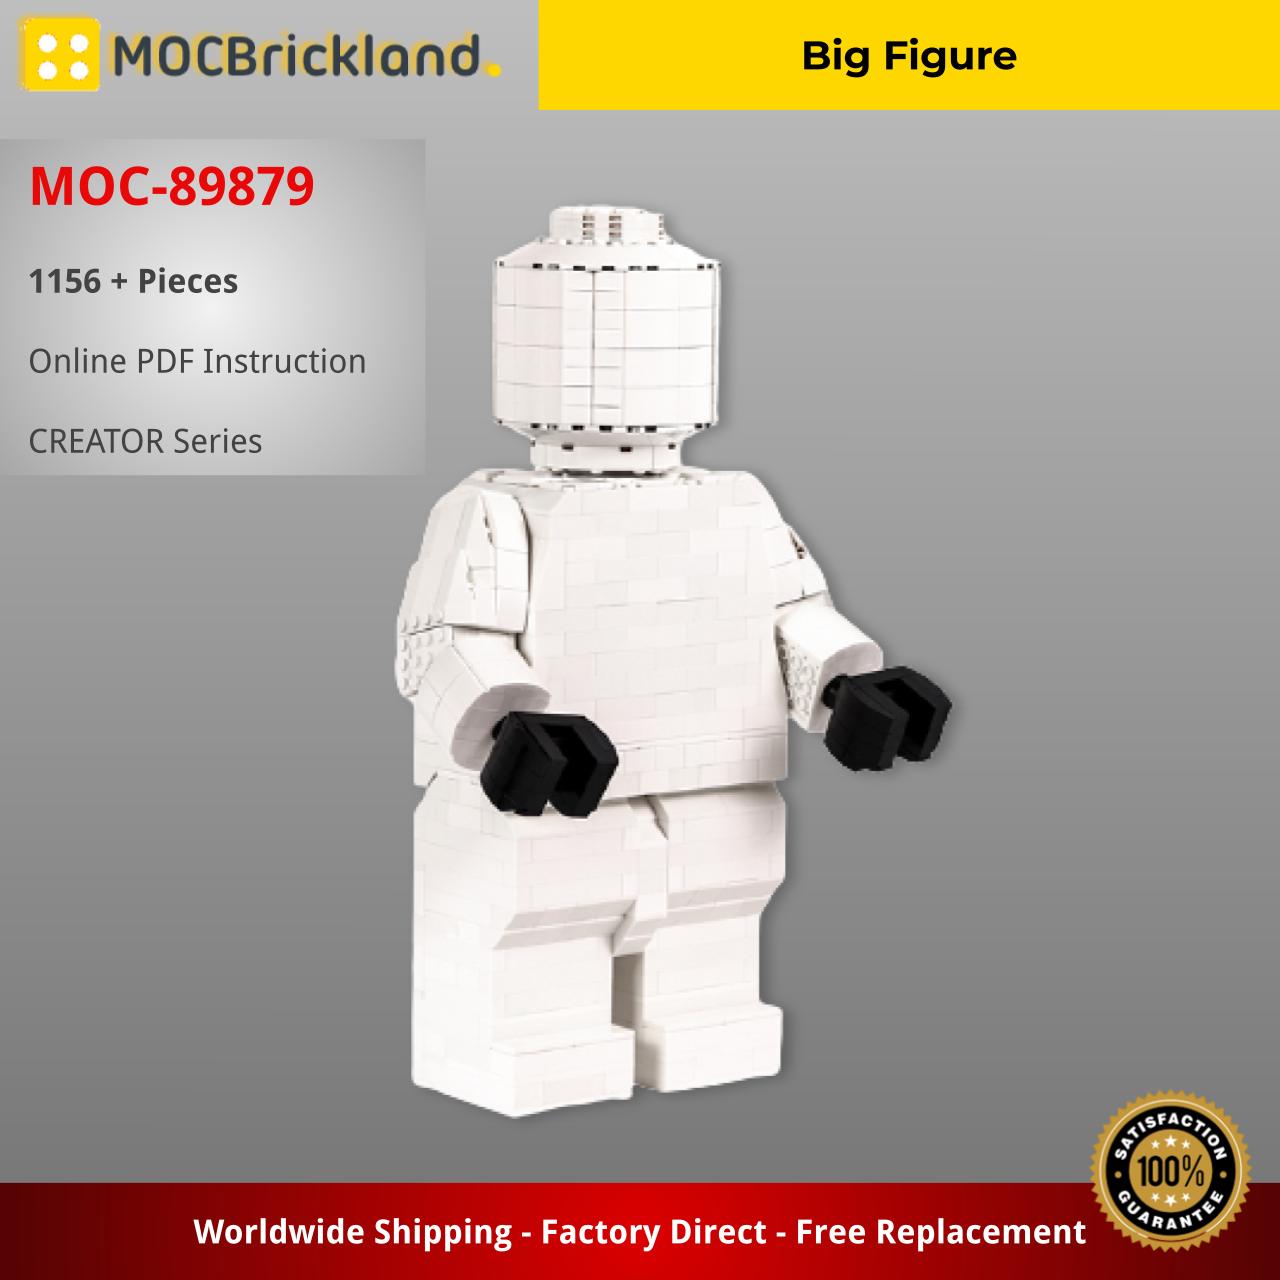 MOCBRICKLAND MOC-89879 Big Figure